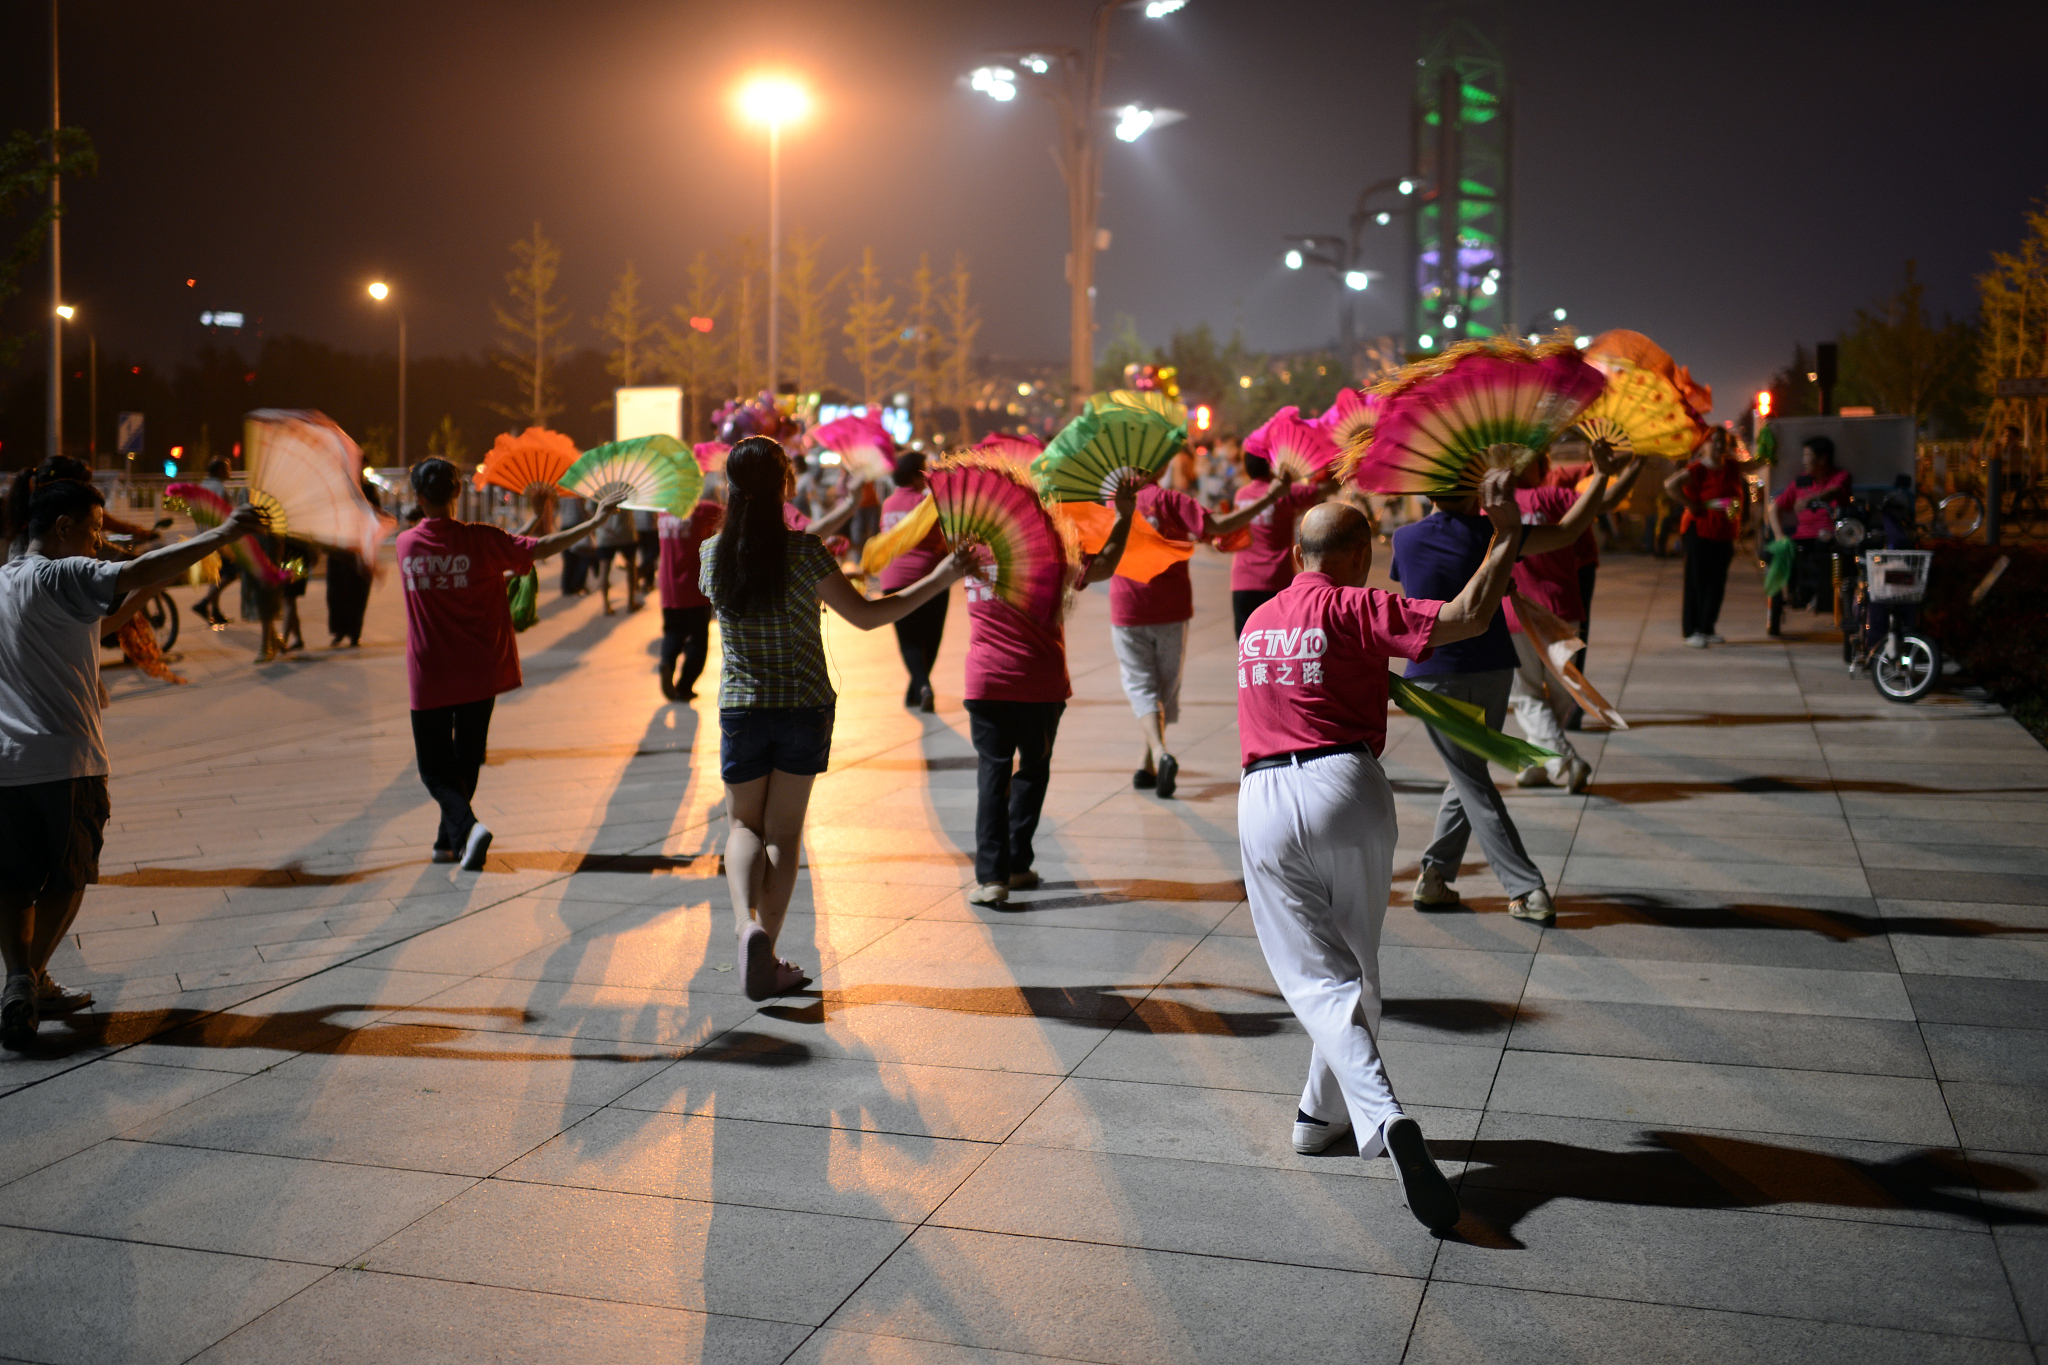 J6iocNnj92QPPRK-许多中国人在晚上跳舞“新年轻人”-XXXLarge